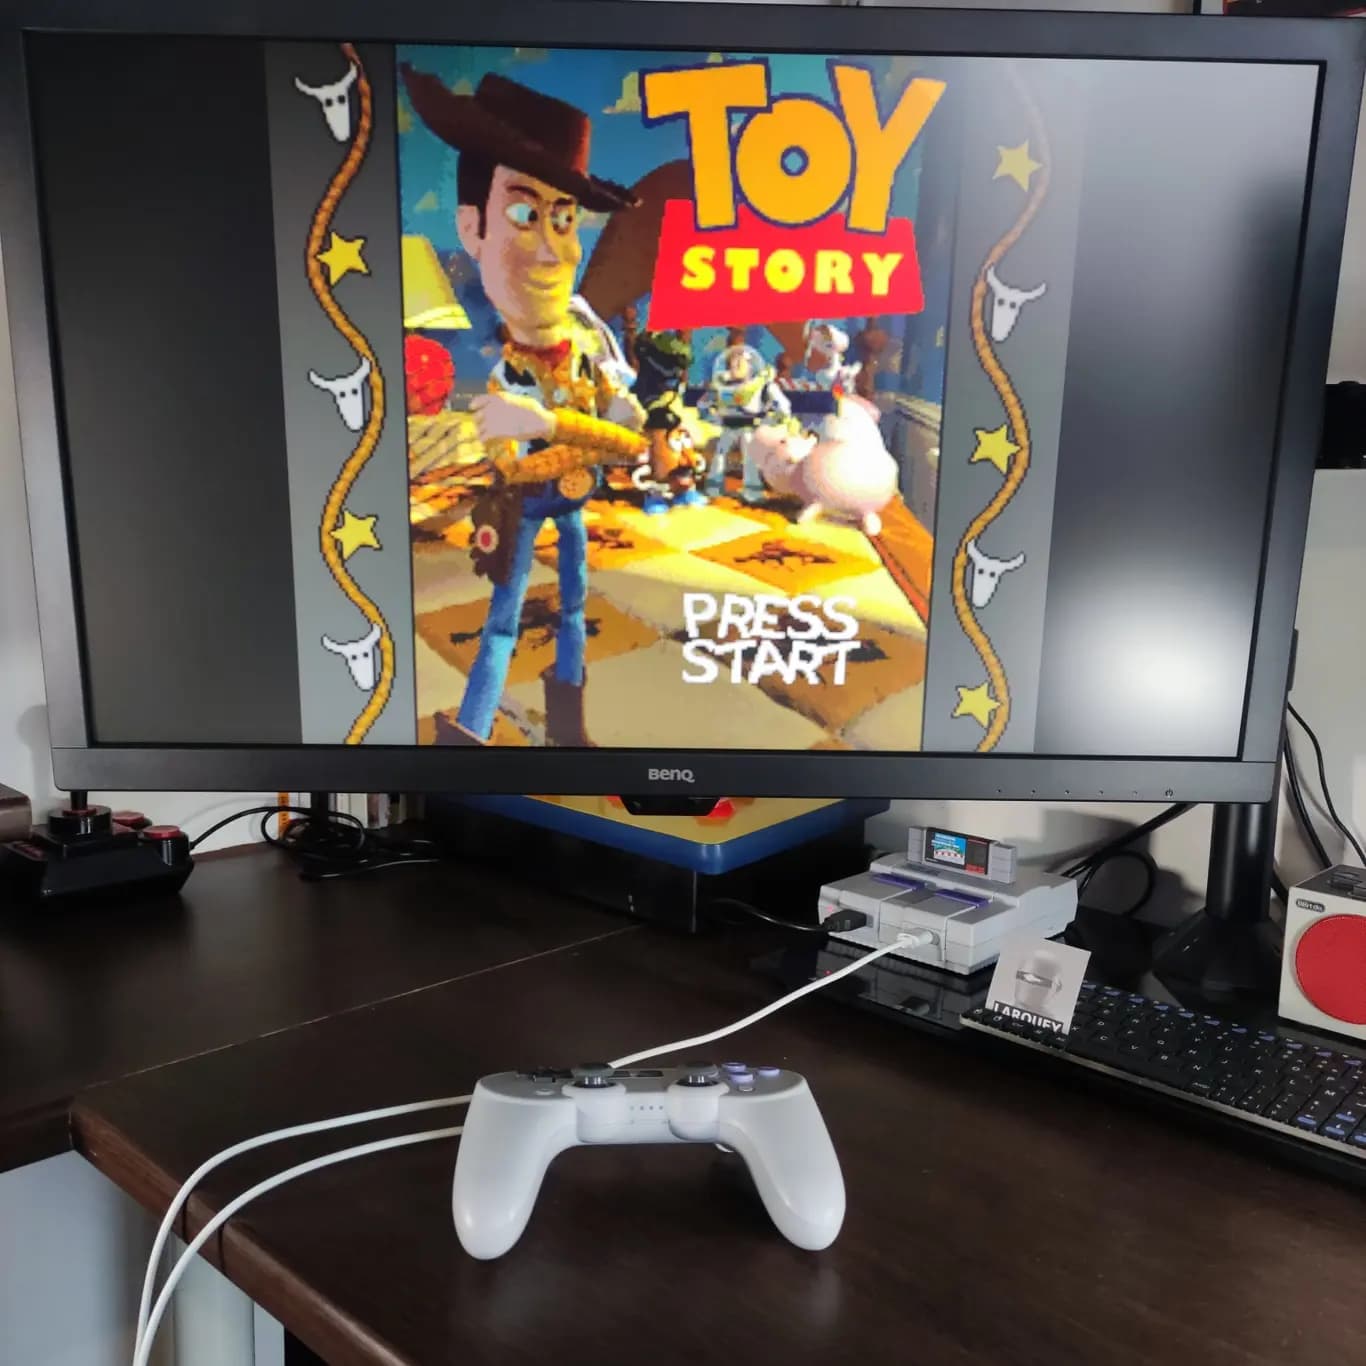 Larquey: Toy Story [Total Stars/Yahoo!] (Sega Genesis / MegaDrive Emulated) 58 points on 2022-09-15 06:56:17